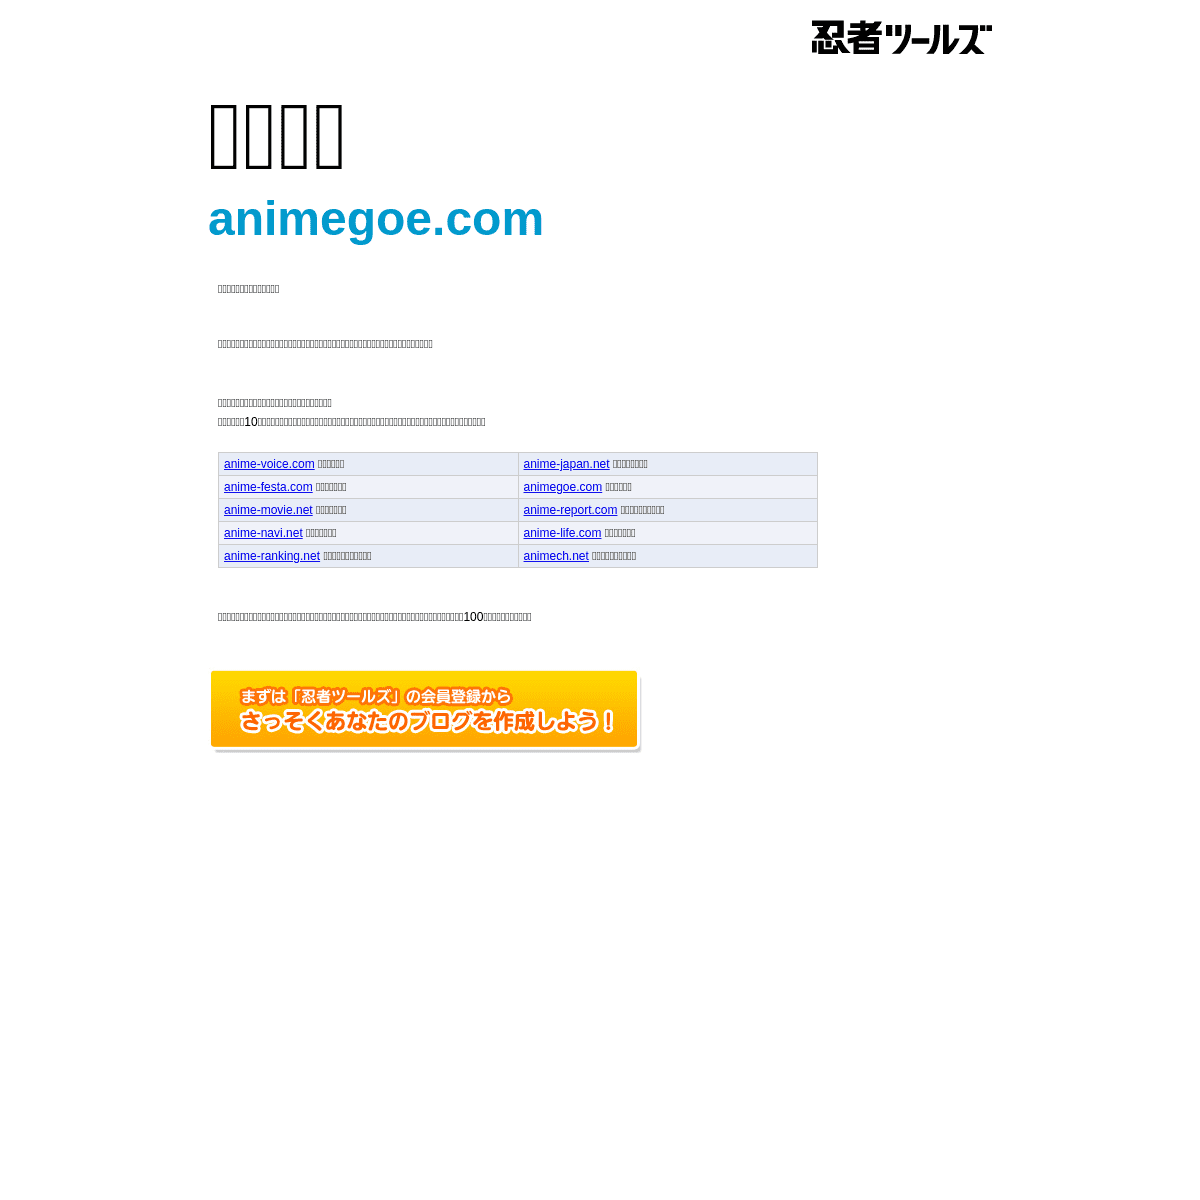 A complete backup of https://animegoe.com